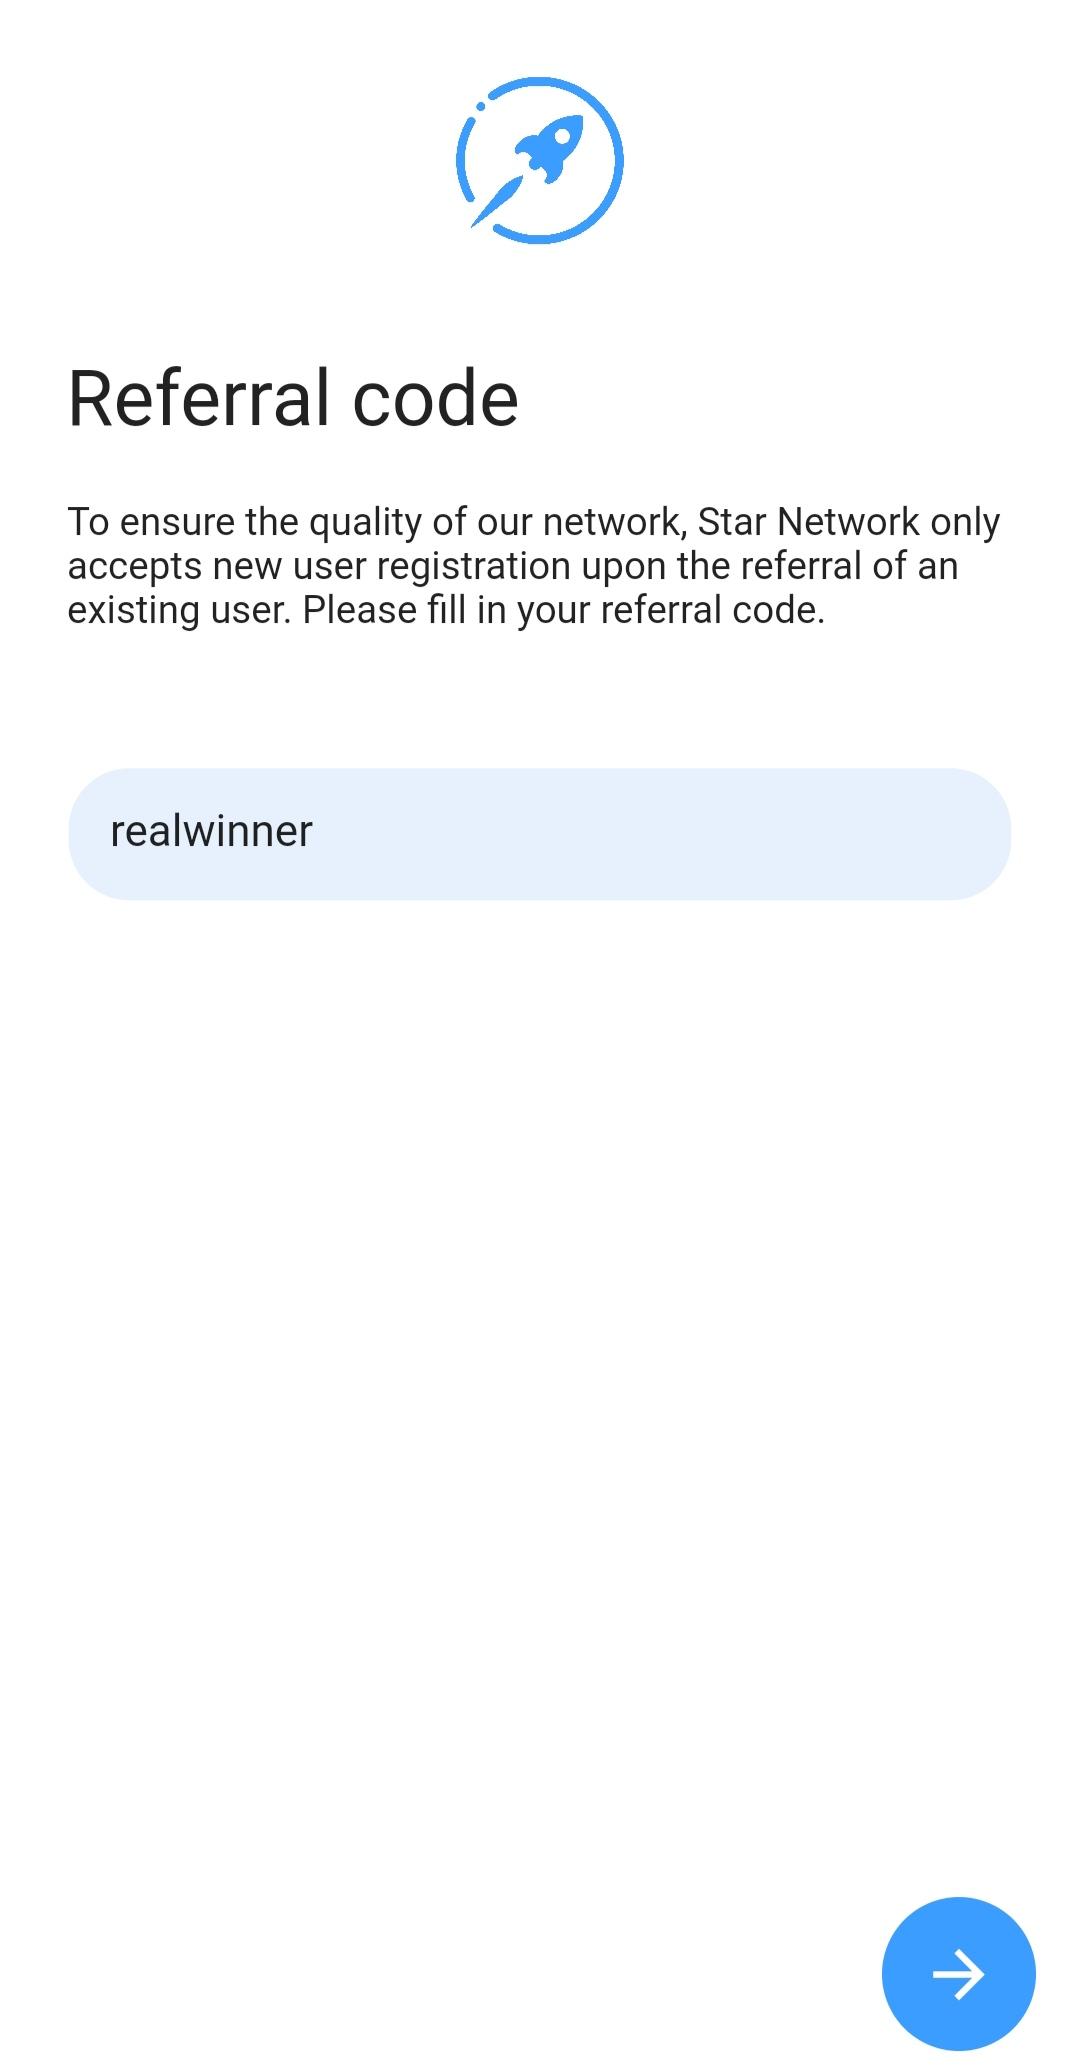 Screenshot image of star network mining referral code of realwinner